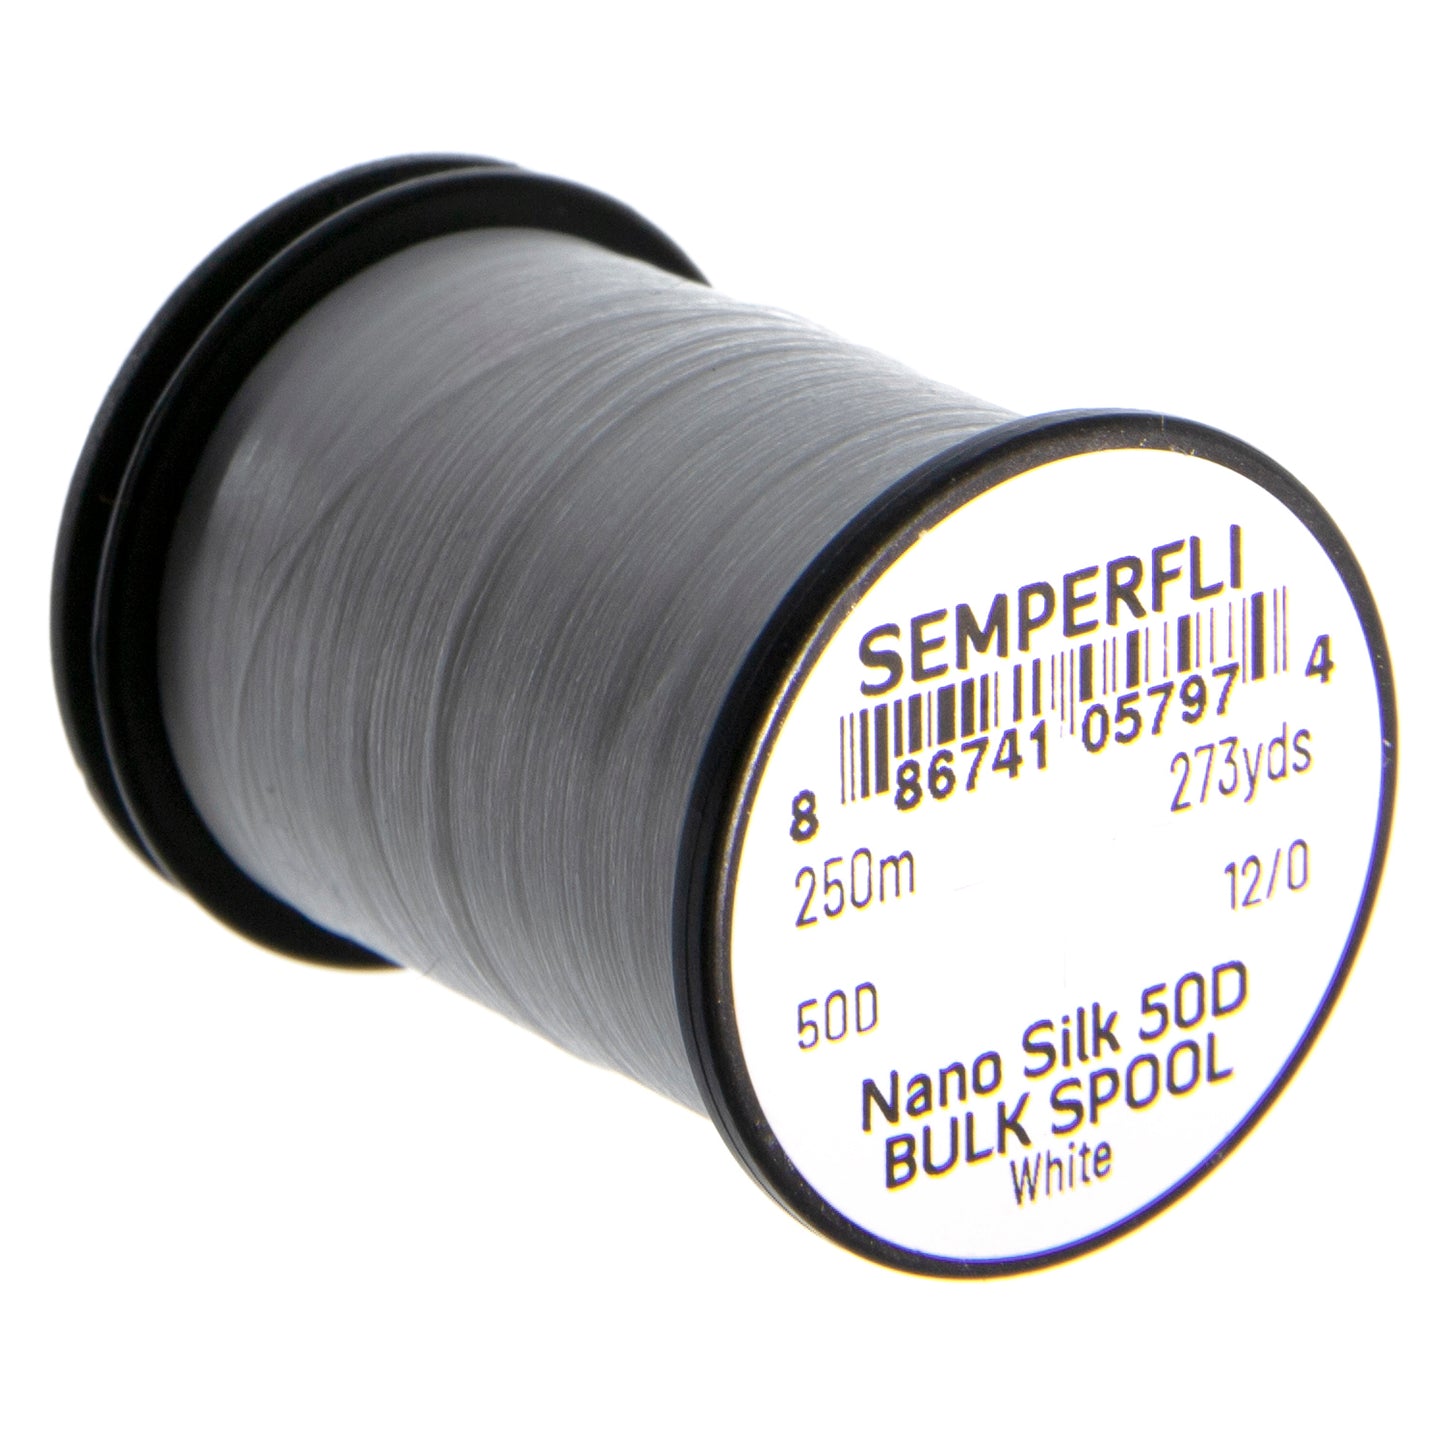 SemperFli Nano Silk 50D 12/0 Bulk 250m Spool